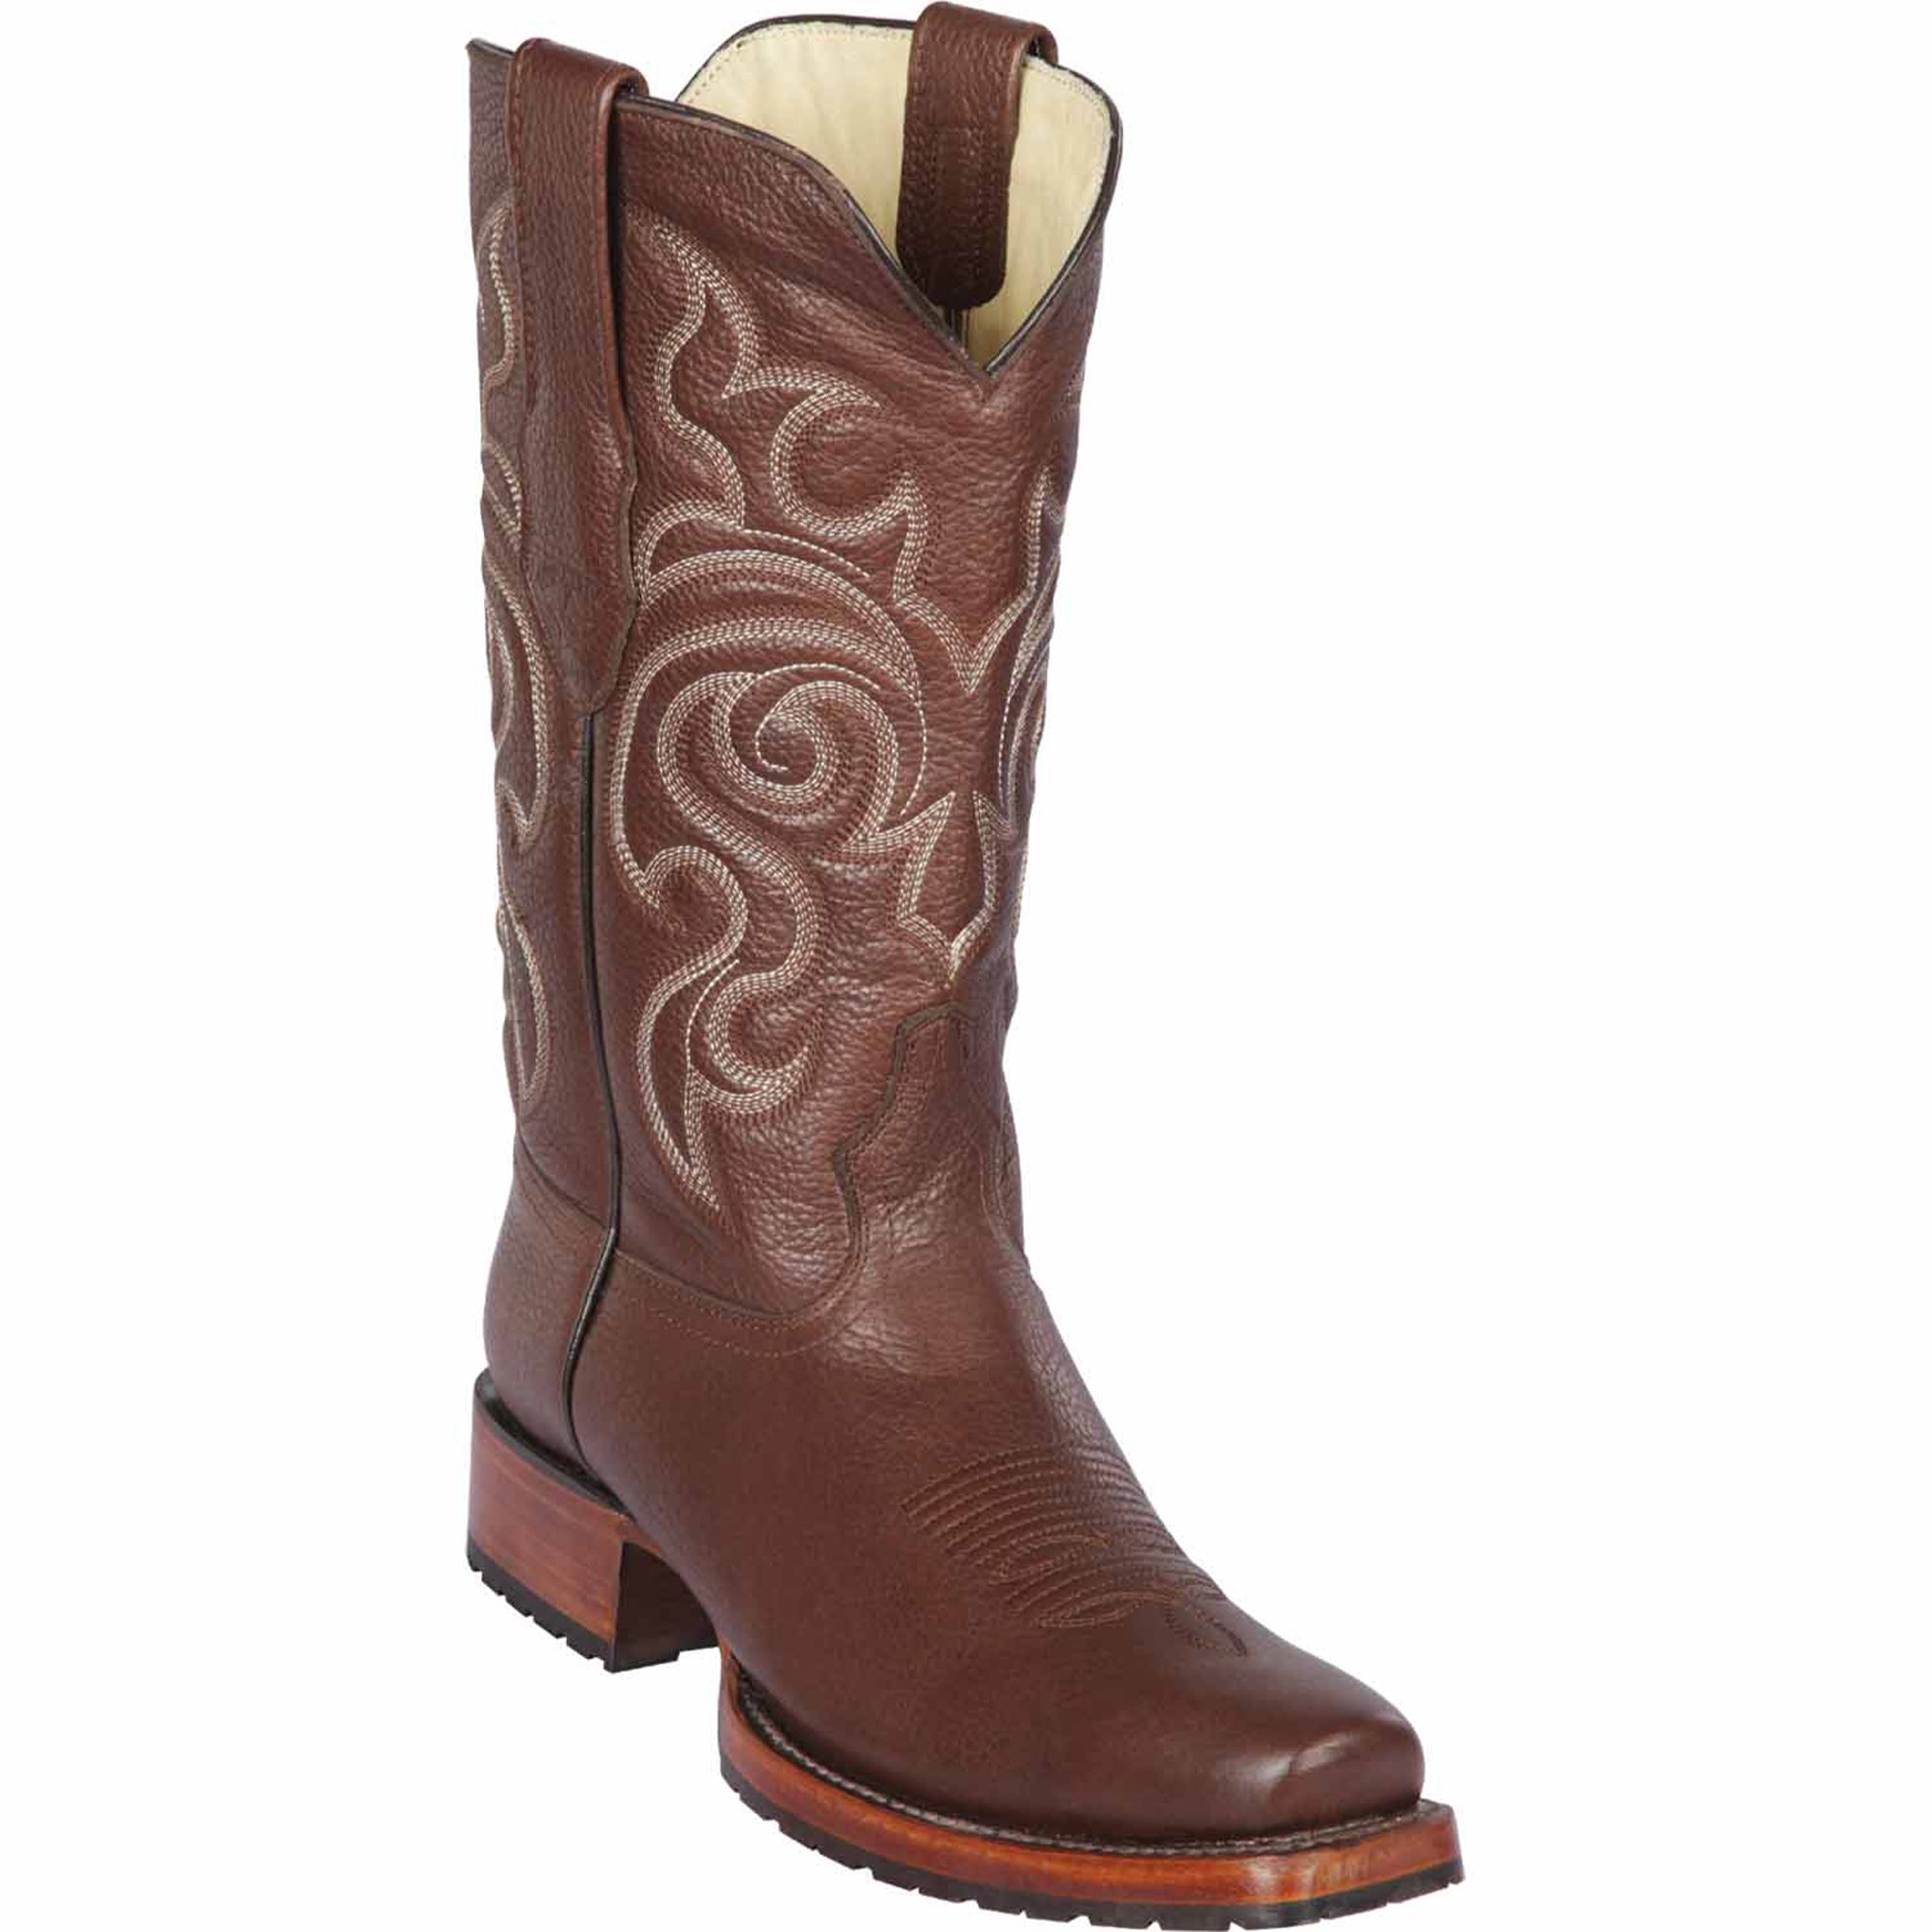 Brown Square Toe Cowboy Boots - Los Altos Boots